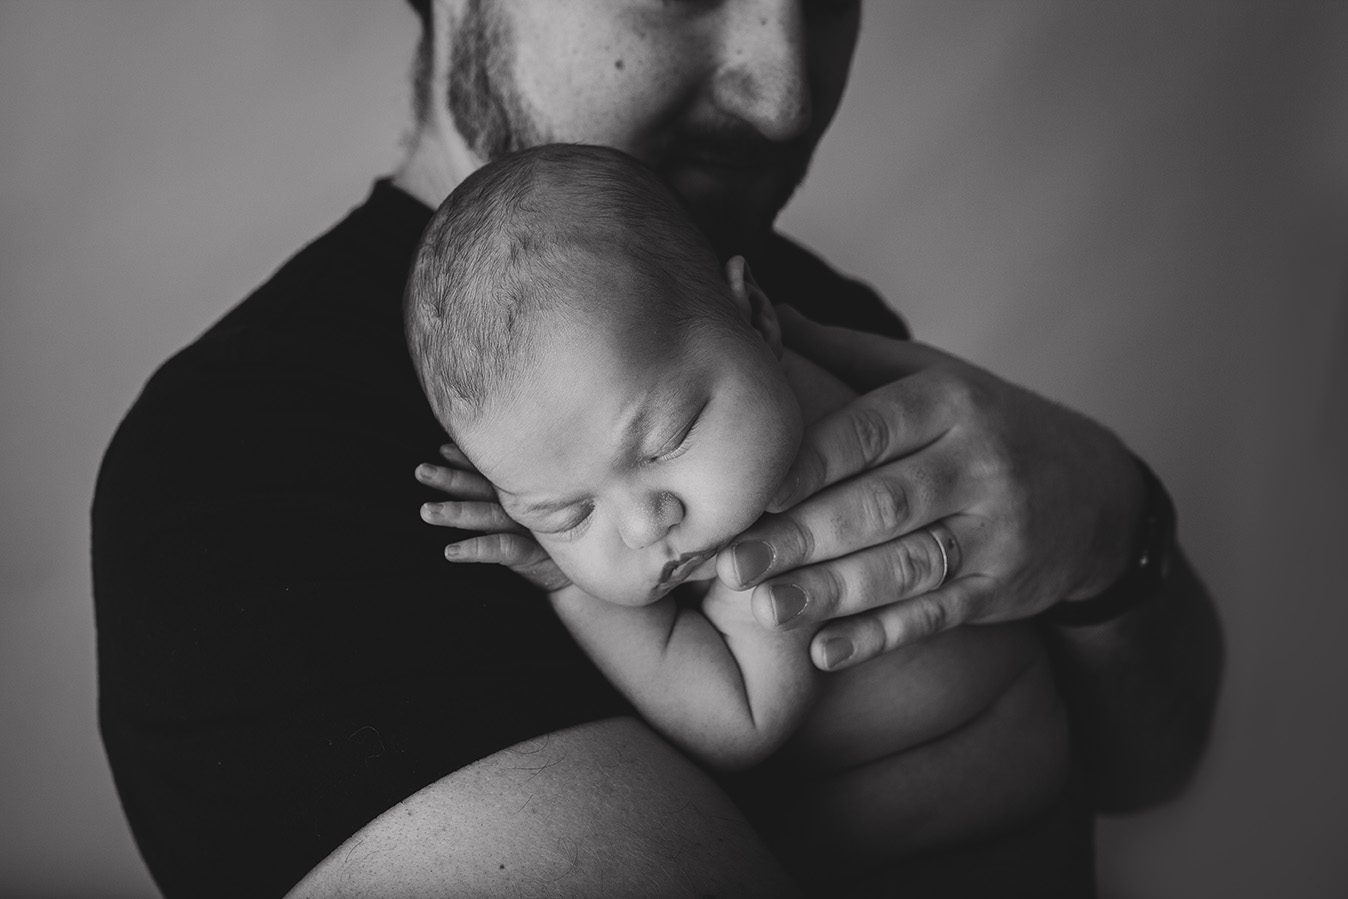 Edmonton newborn photographer - posed with daddy